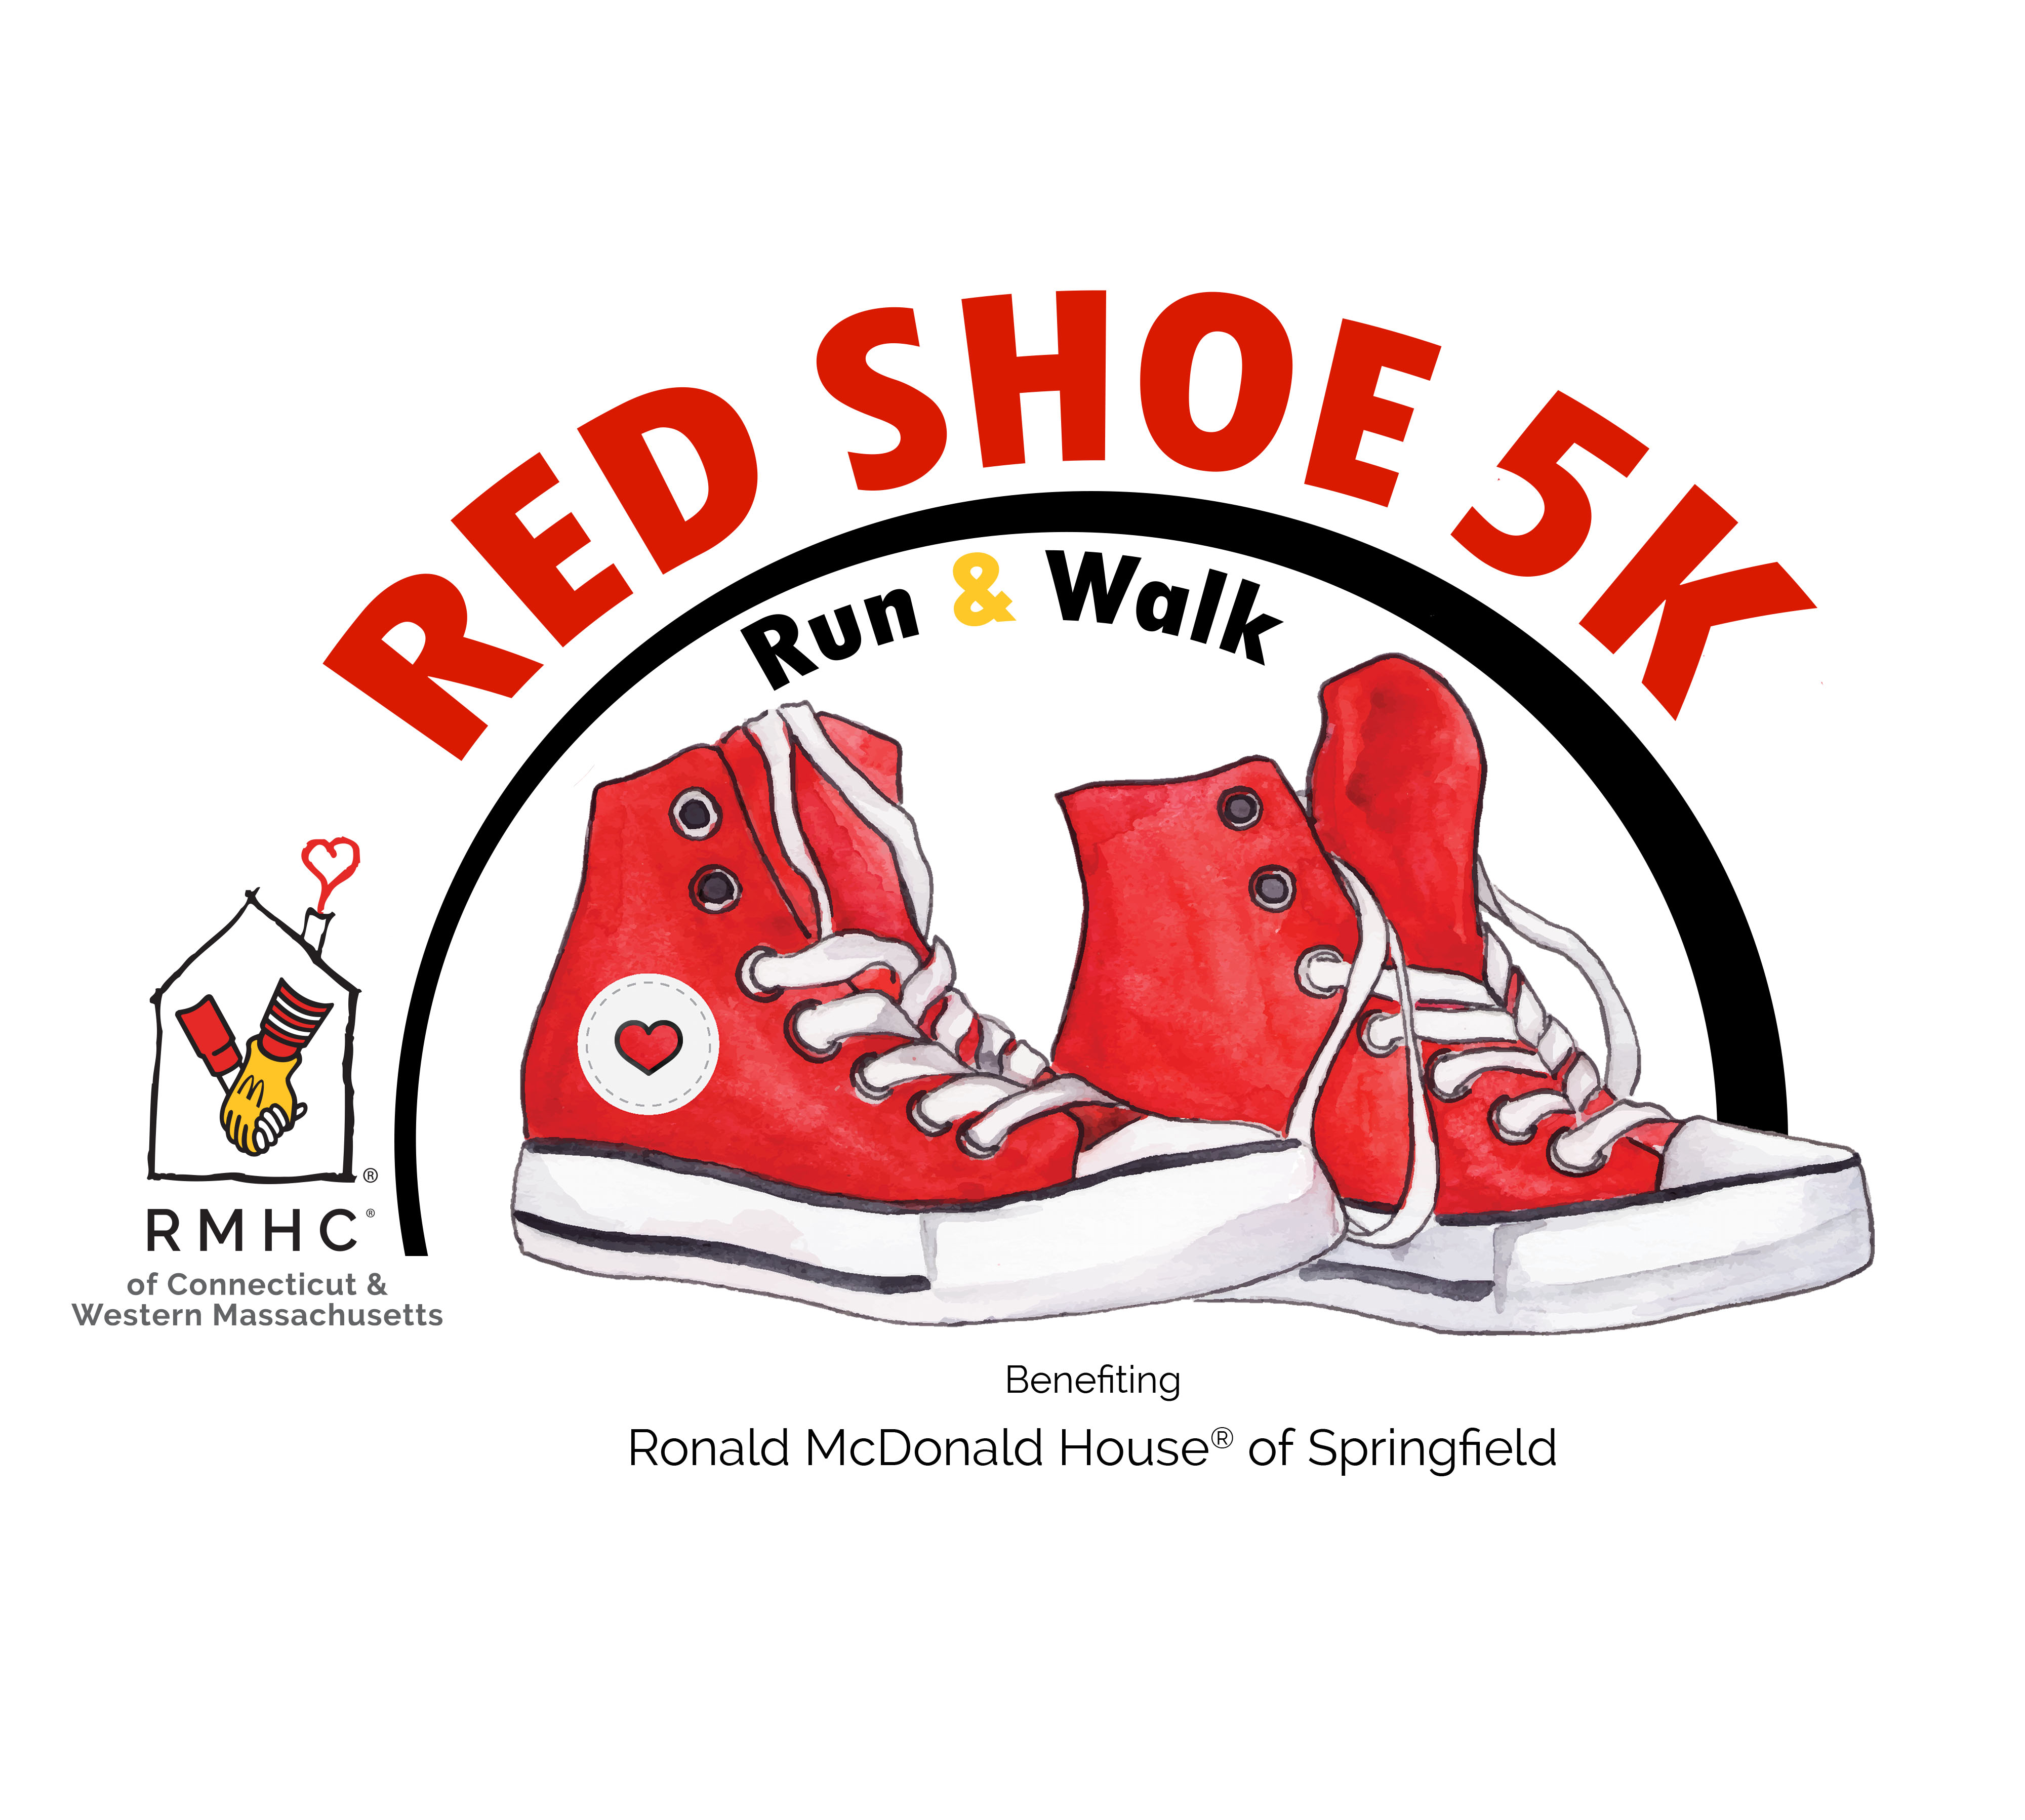 Ronald McDonald House of Springfield Red Shoe Run & Walk 5K logo on RaceRaves